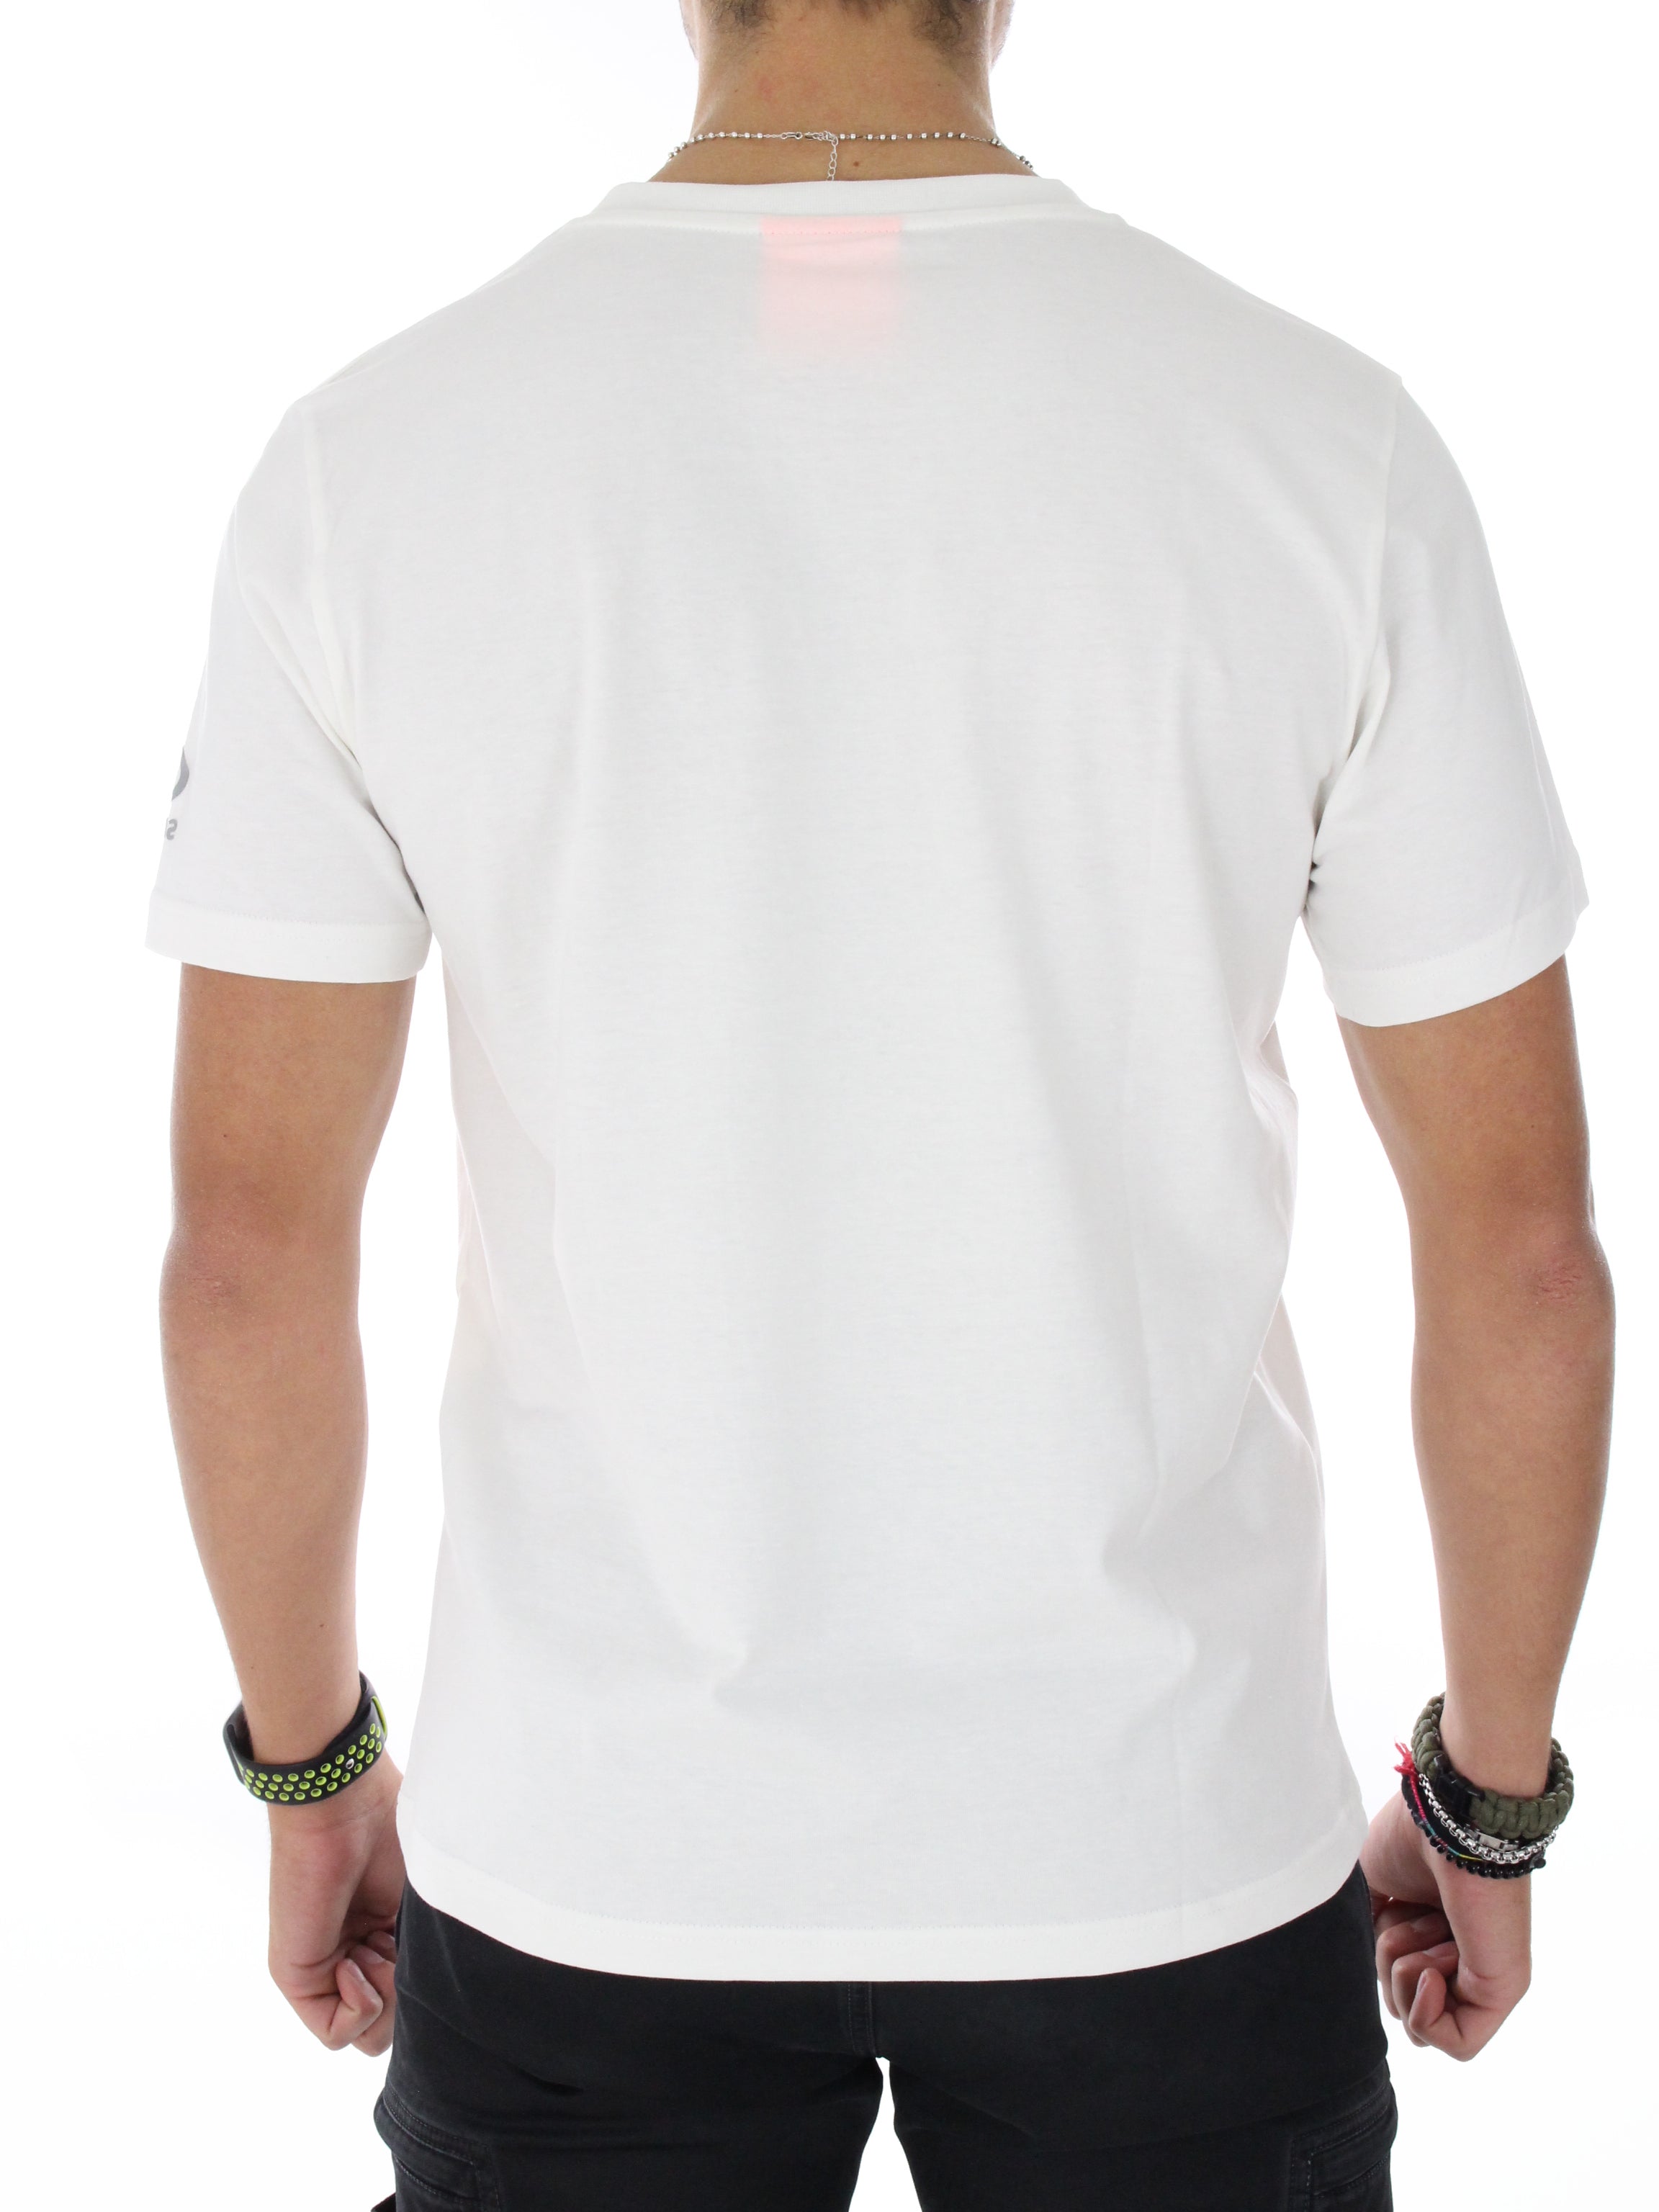 Paolo 3u white t-shirt